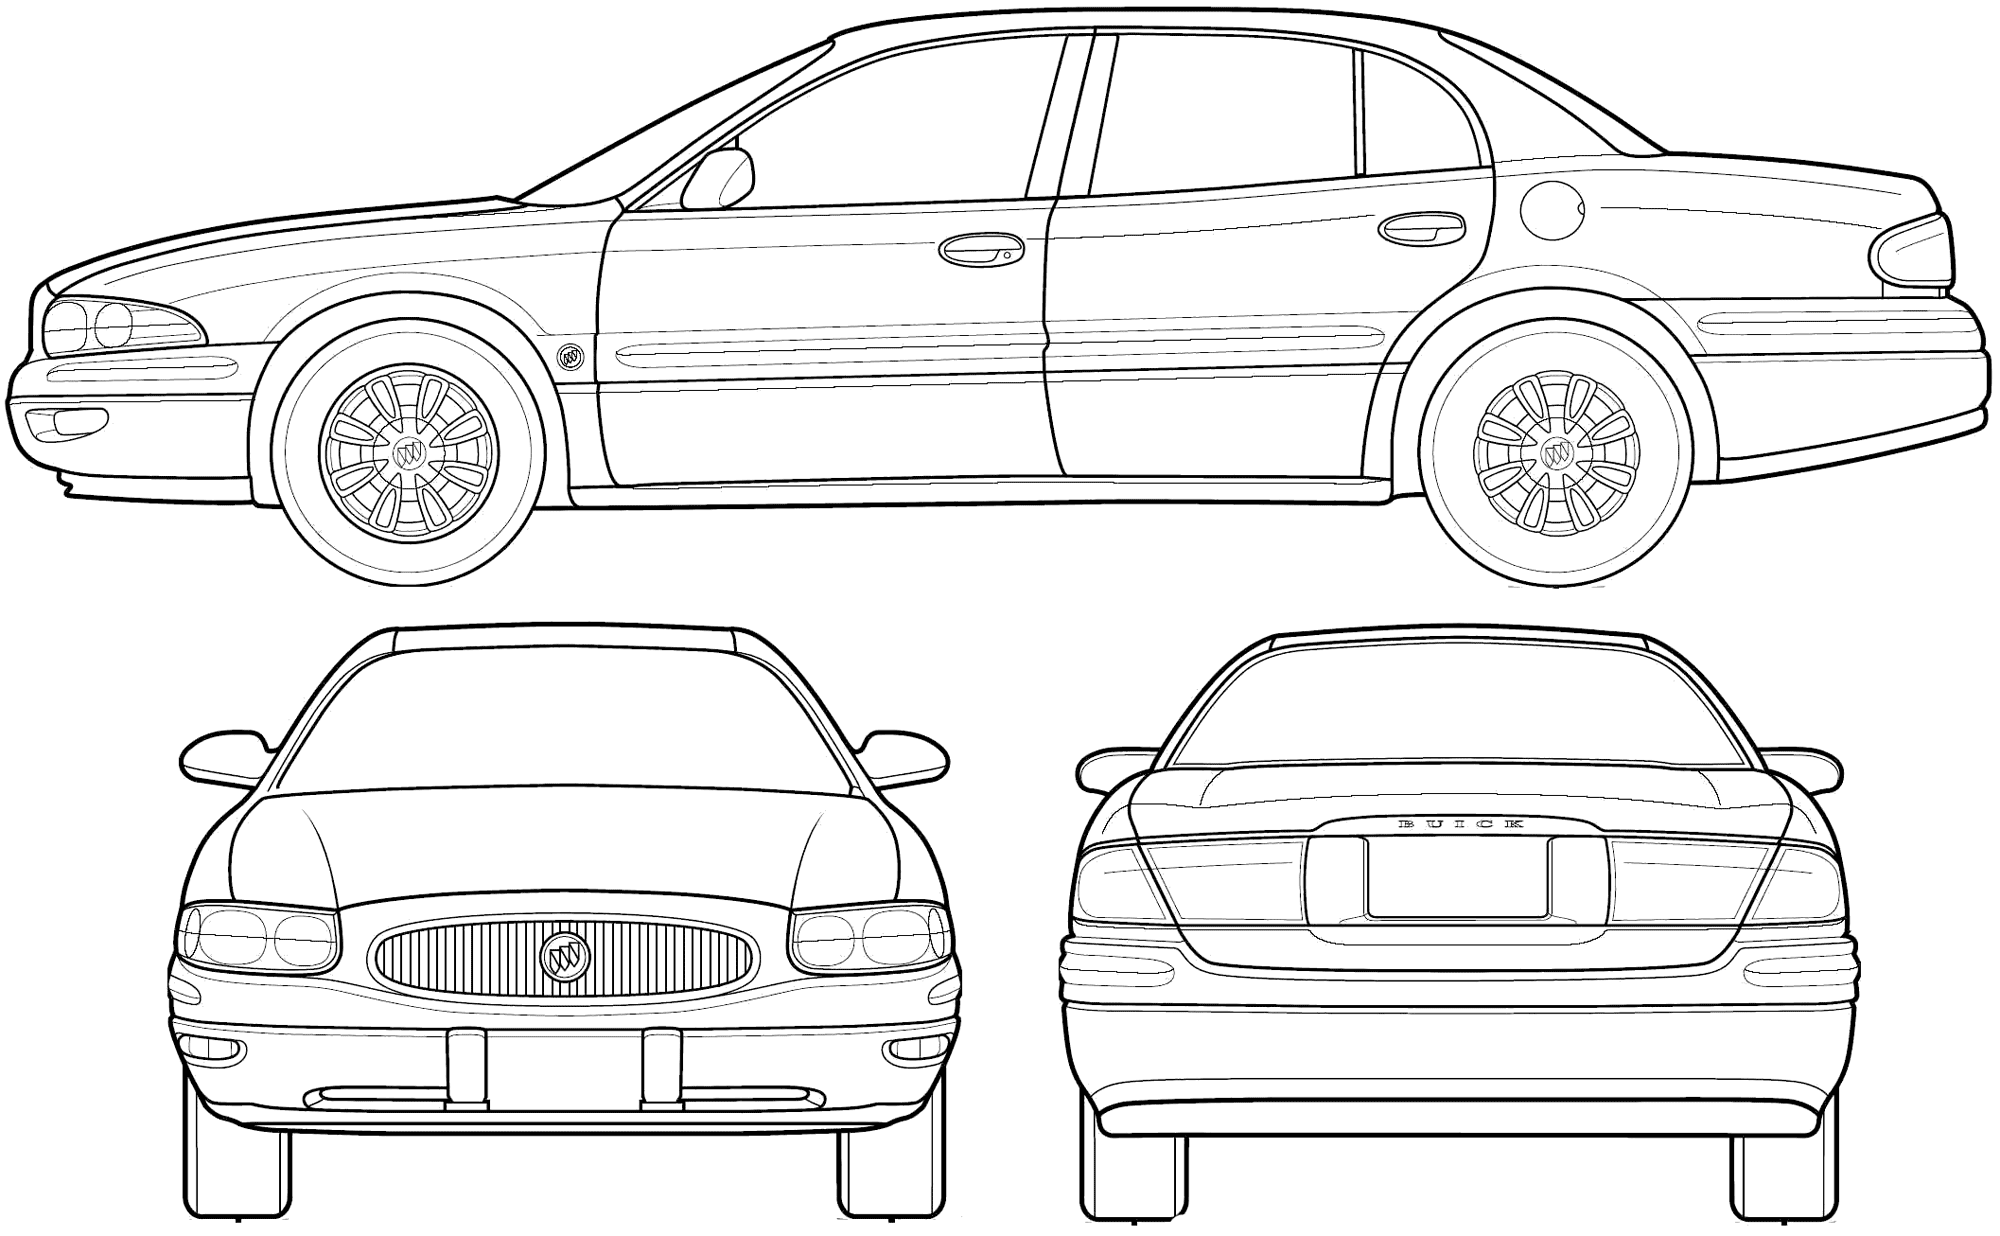 2005 Buick LeSabre Sedan blueprints free - Outlines